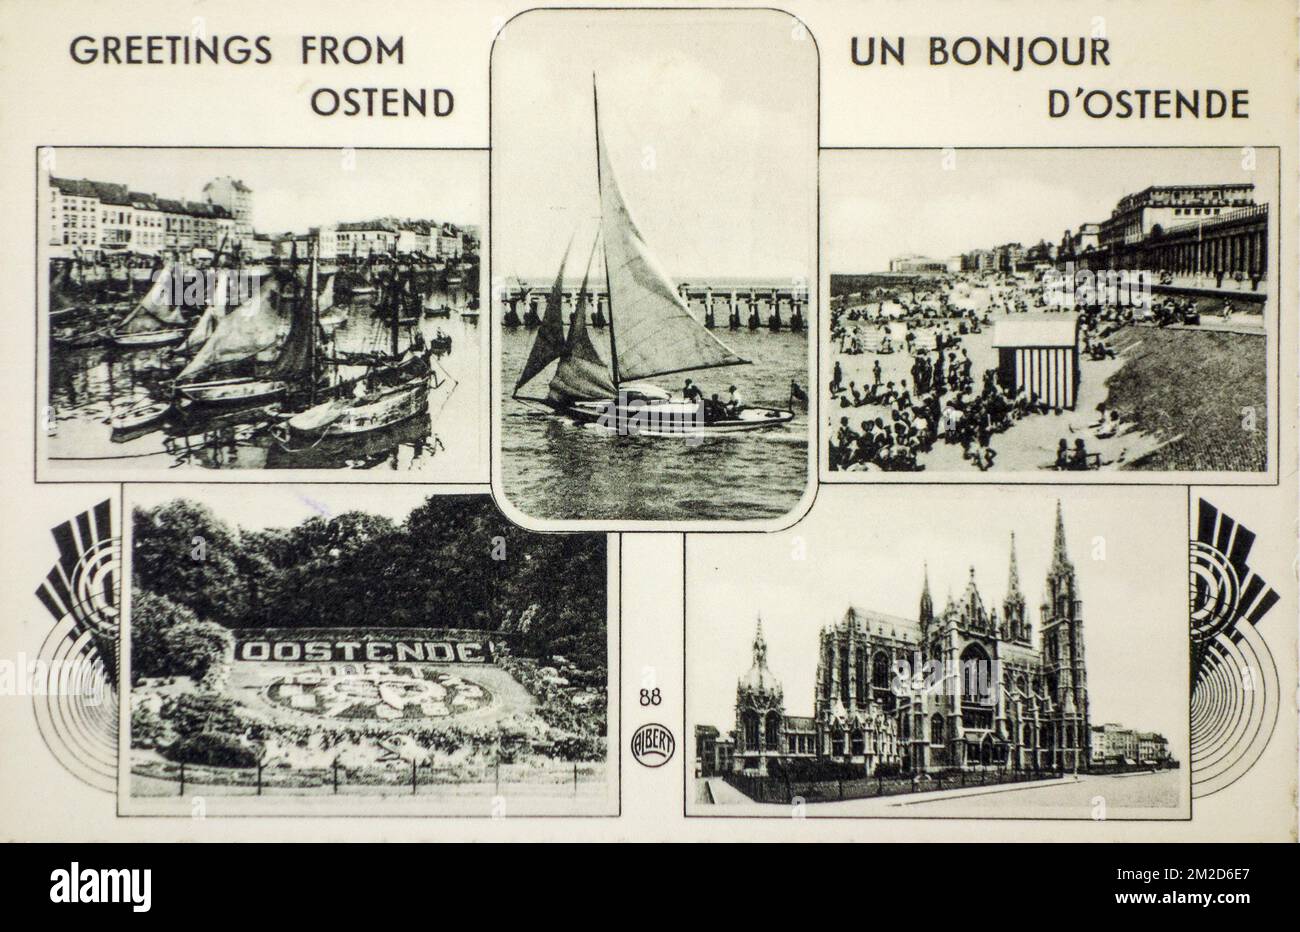 Alte Postkarte aus dem 20.. Jahrhundert, altes Foto des belgischen Küstenurlaubs Ostende/Oostende Seebad, Belgien | Carte postale Vintage d' Ostende/Oostende, Belgique 18/02/2018 Stockfoto